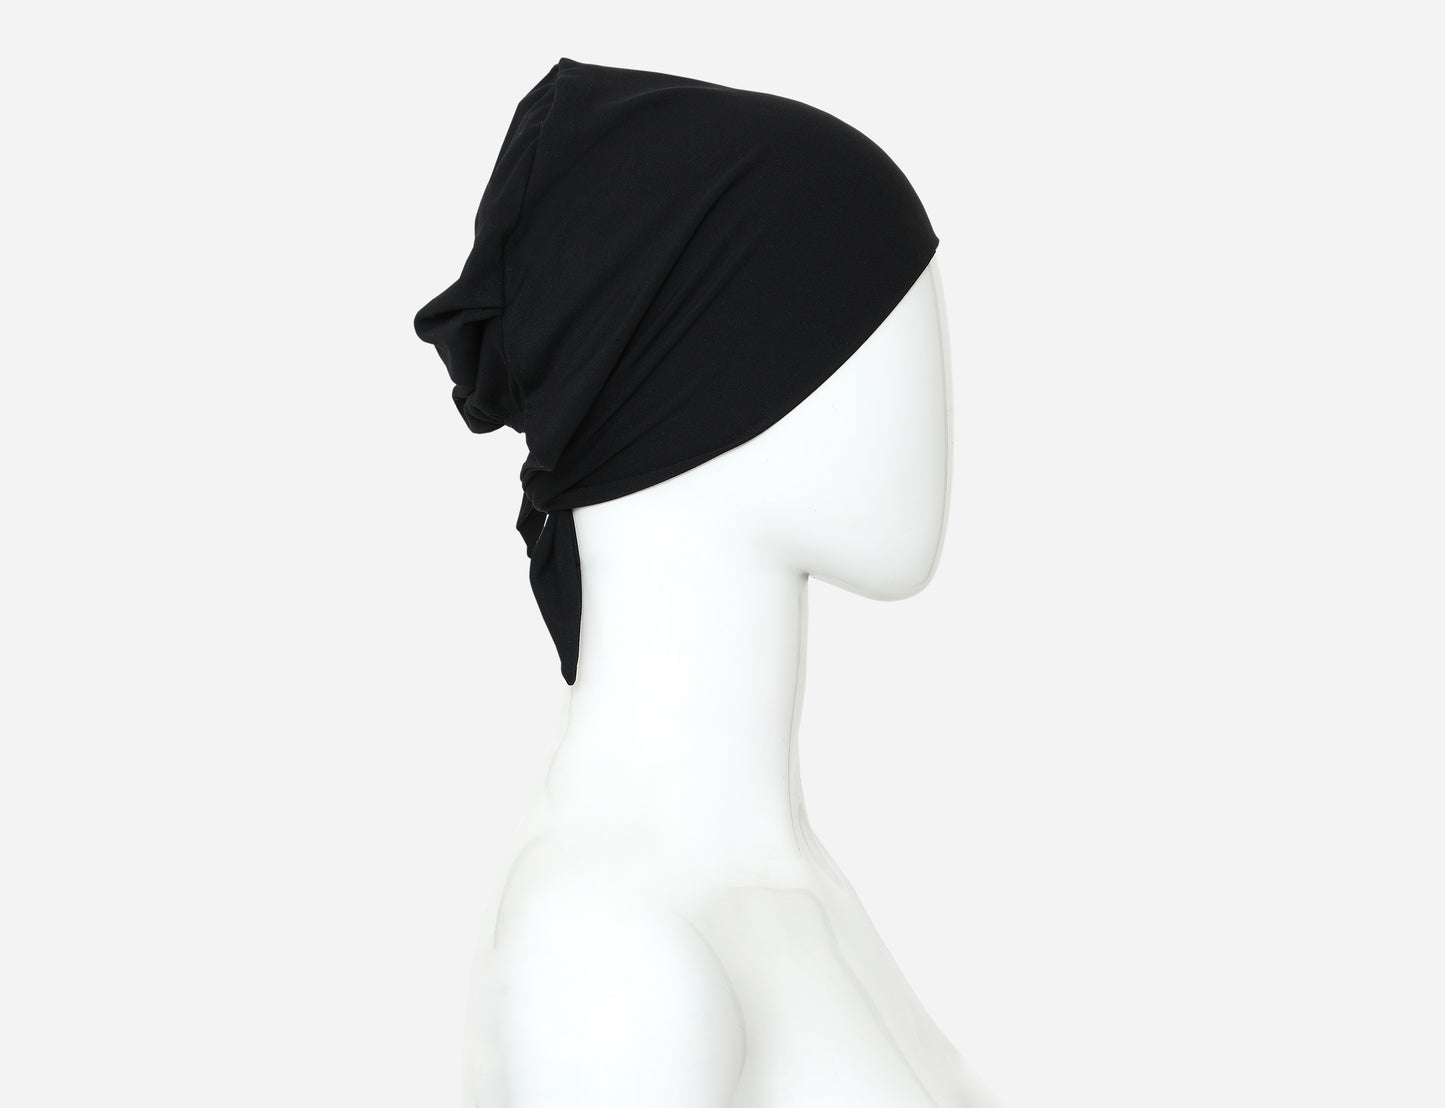 Activewear Under-Hijab with short cords